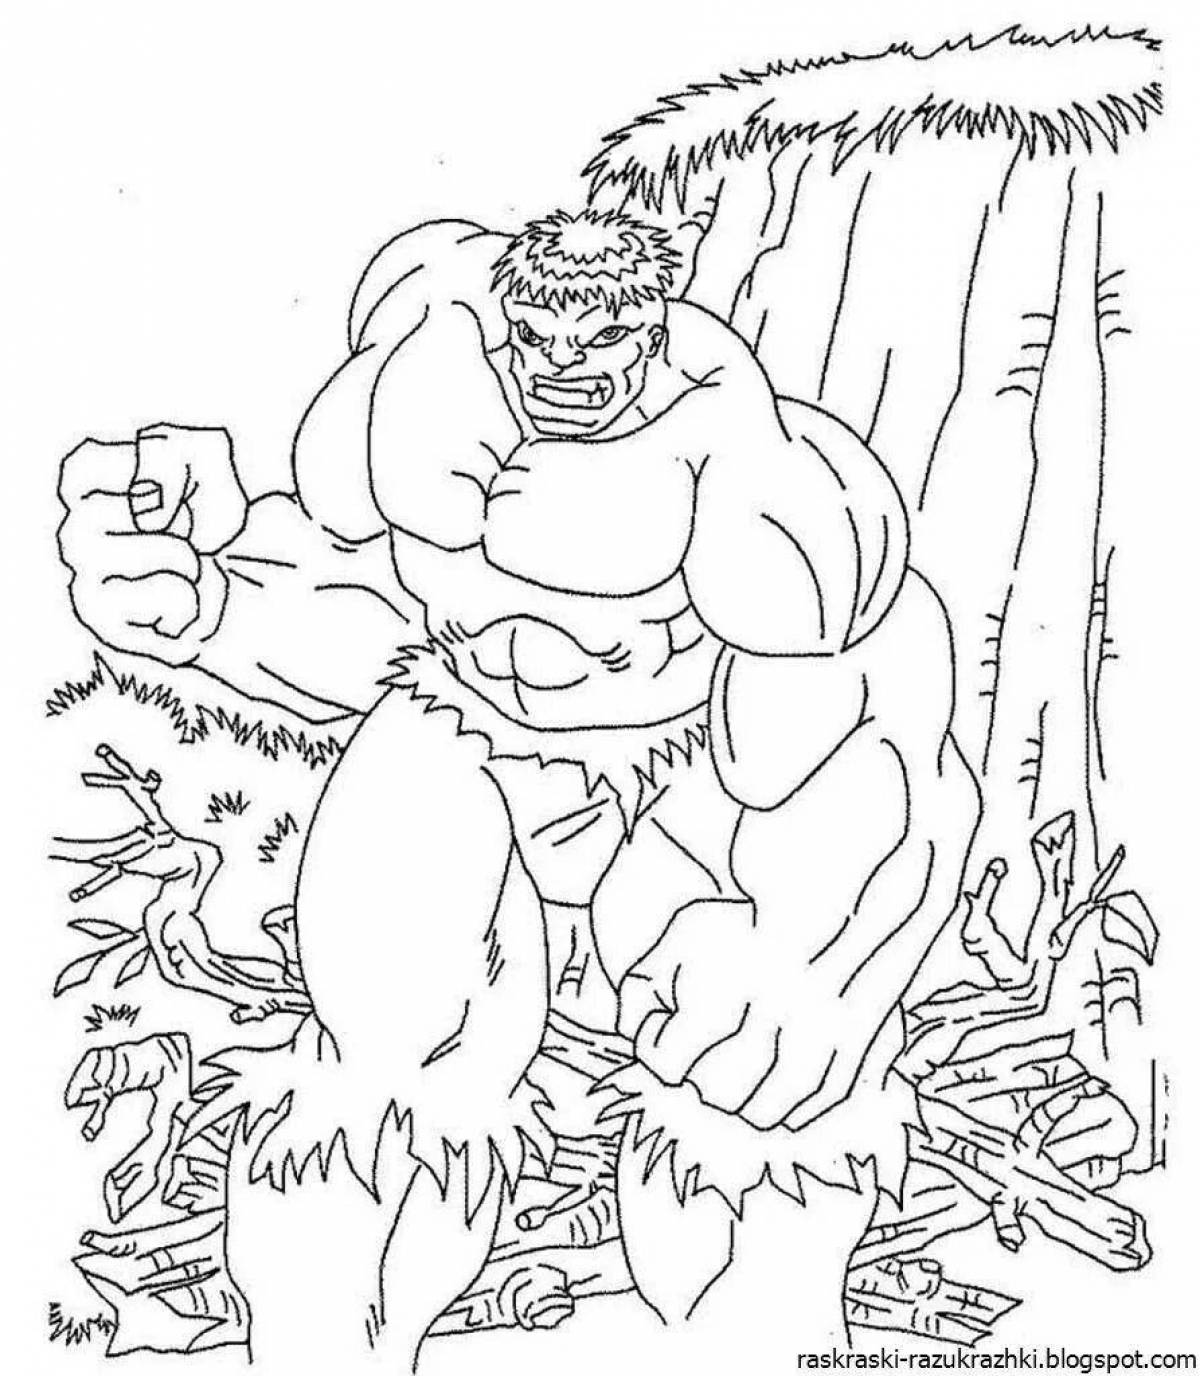 Fabulous Hulk coloring page